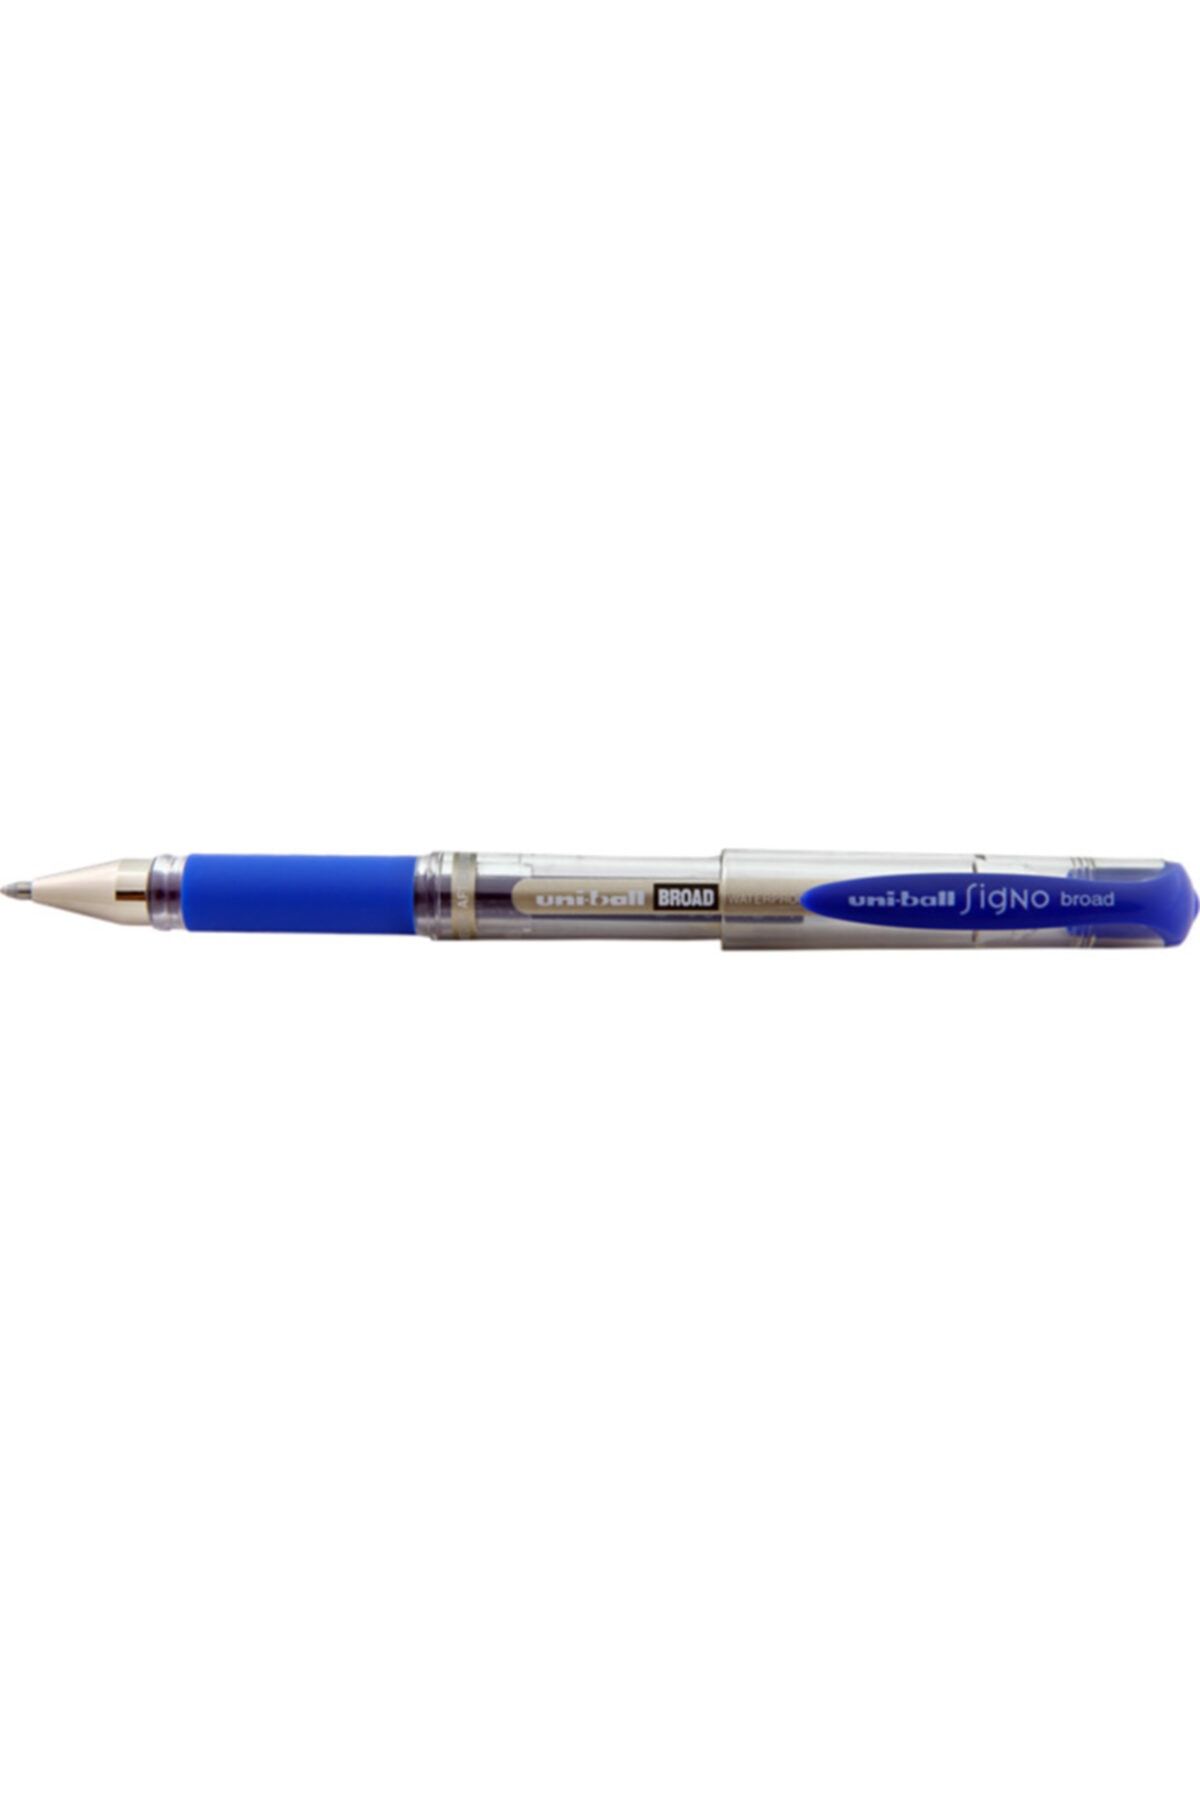 Uni Unı Um-153 Mavı Sıgno Broad 1.0 Imza Kalemı Mavı